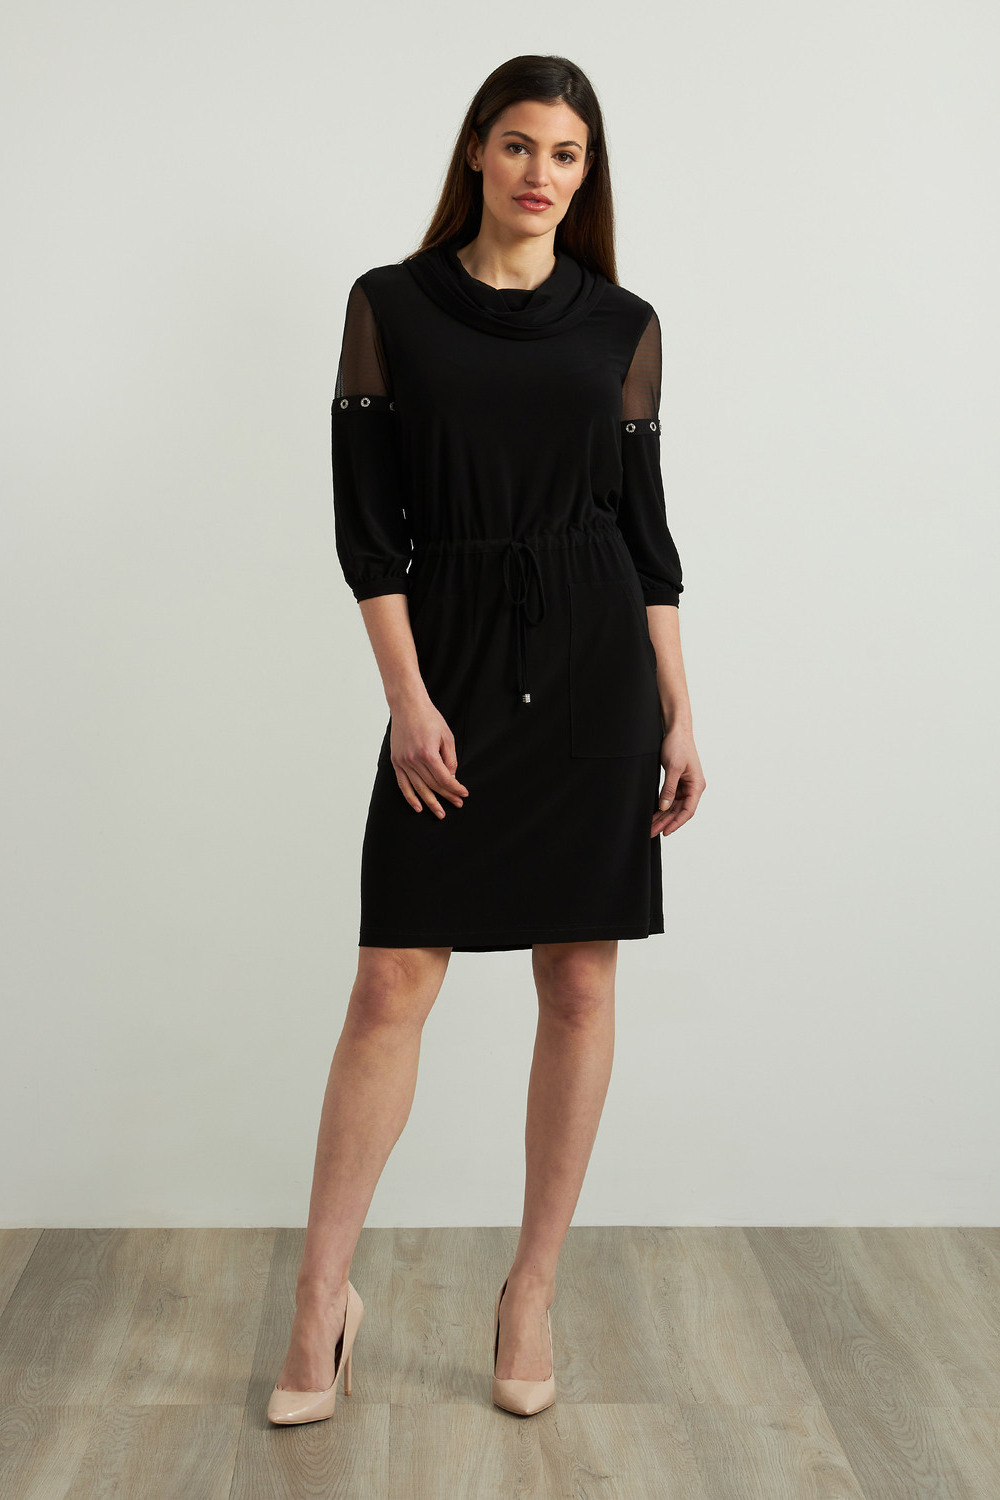 Joseph Ribkoff Mesh Detail Dress Style 213458. Black